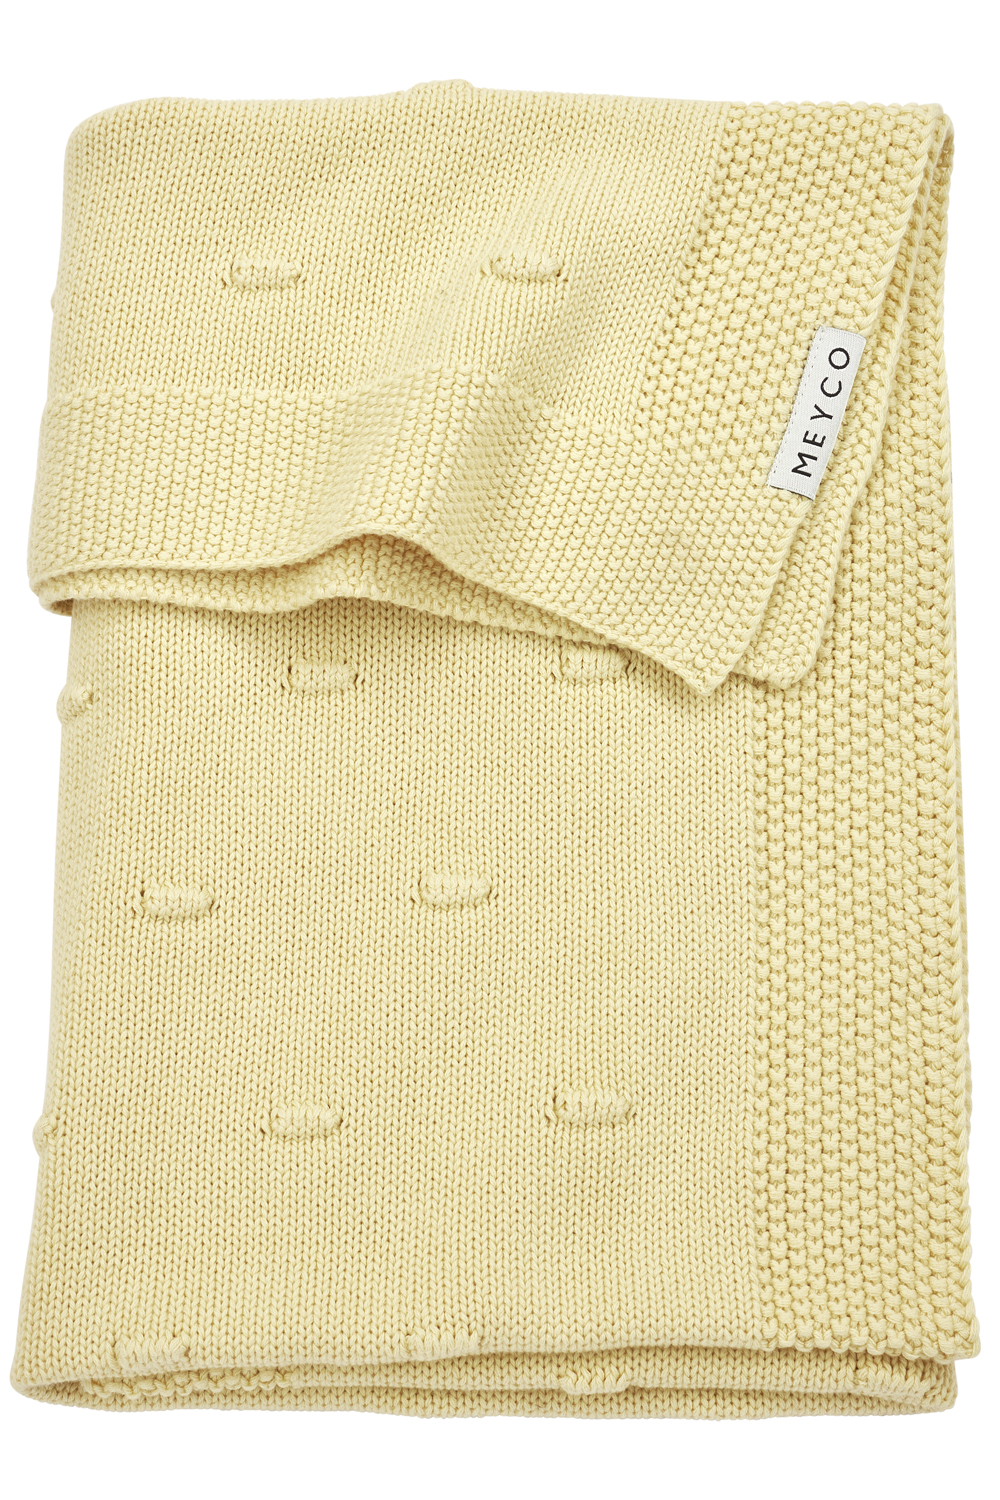 Babydecke Knots - soft yellow - 75x100cm